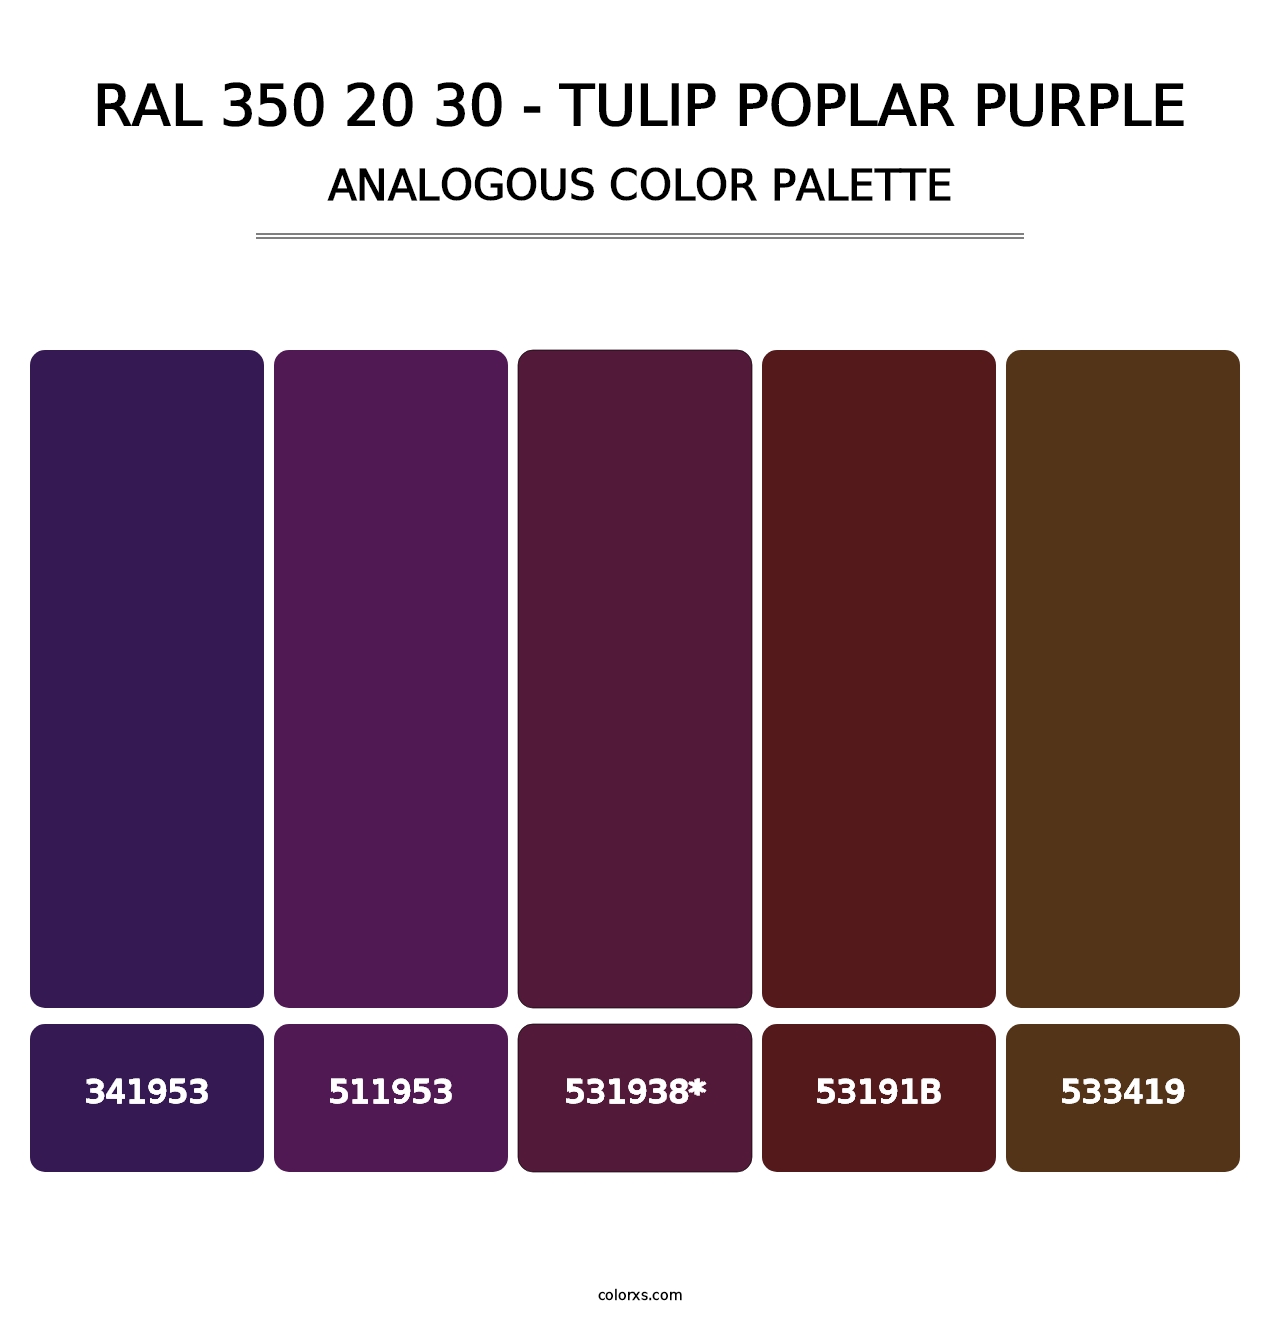 RAL 350 20 30 - Tulip Poplar Purple - Analogous Color Palette